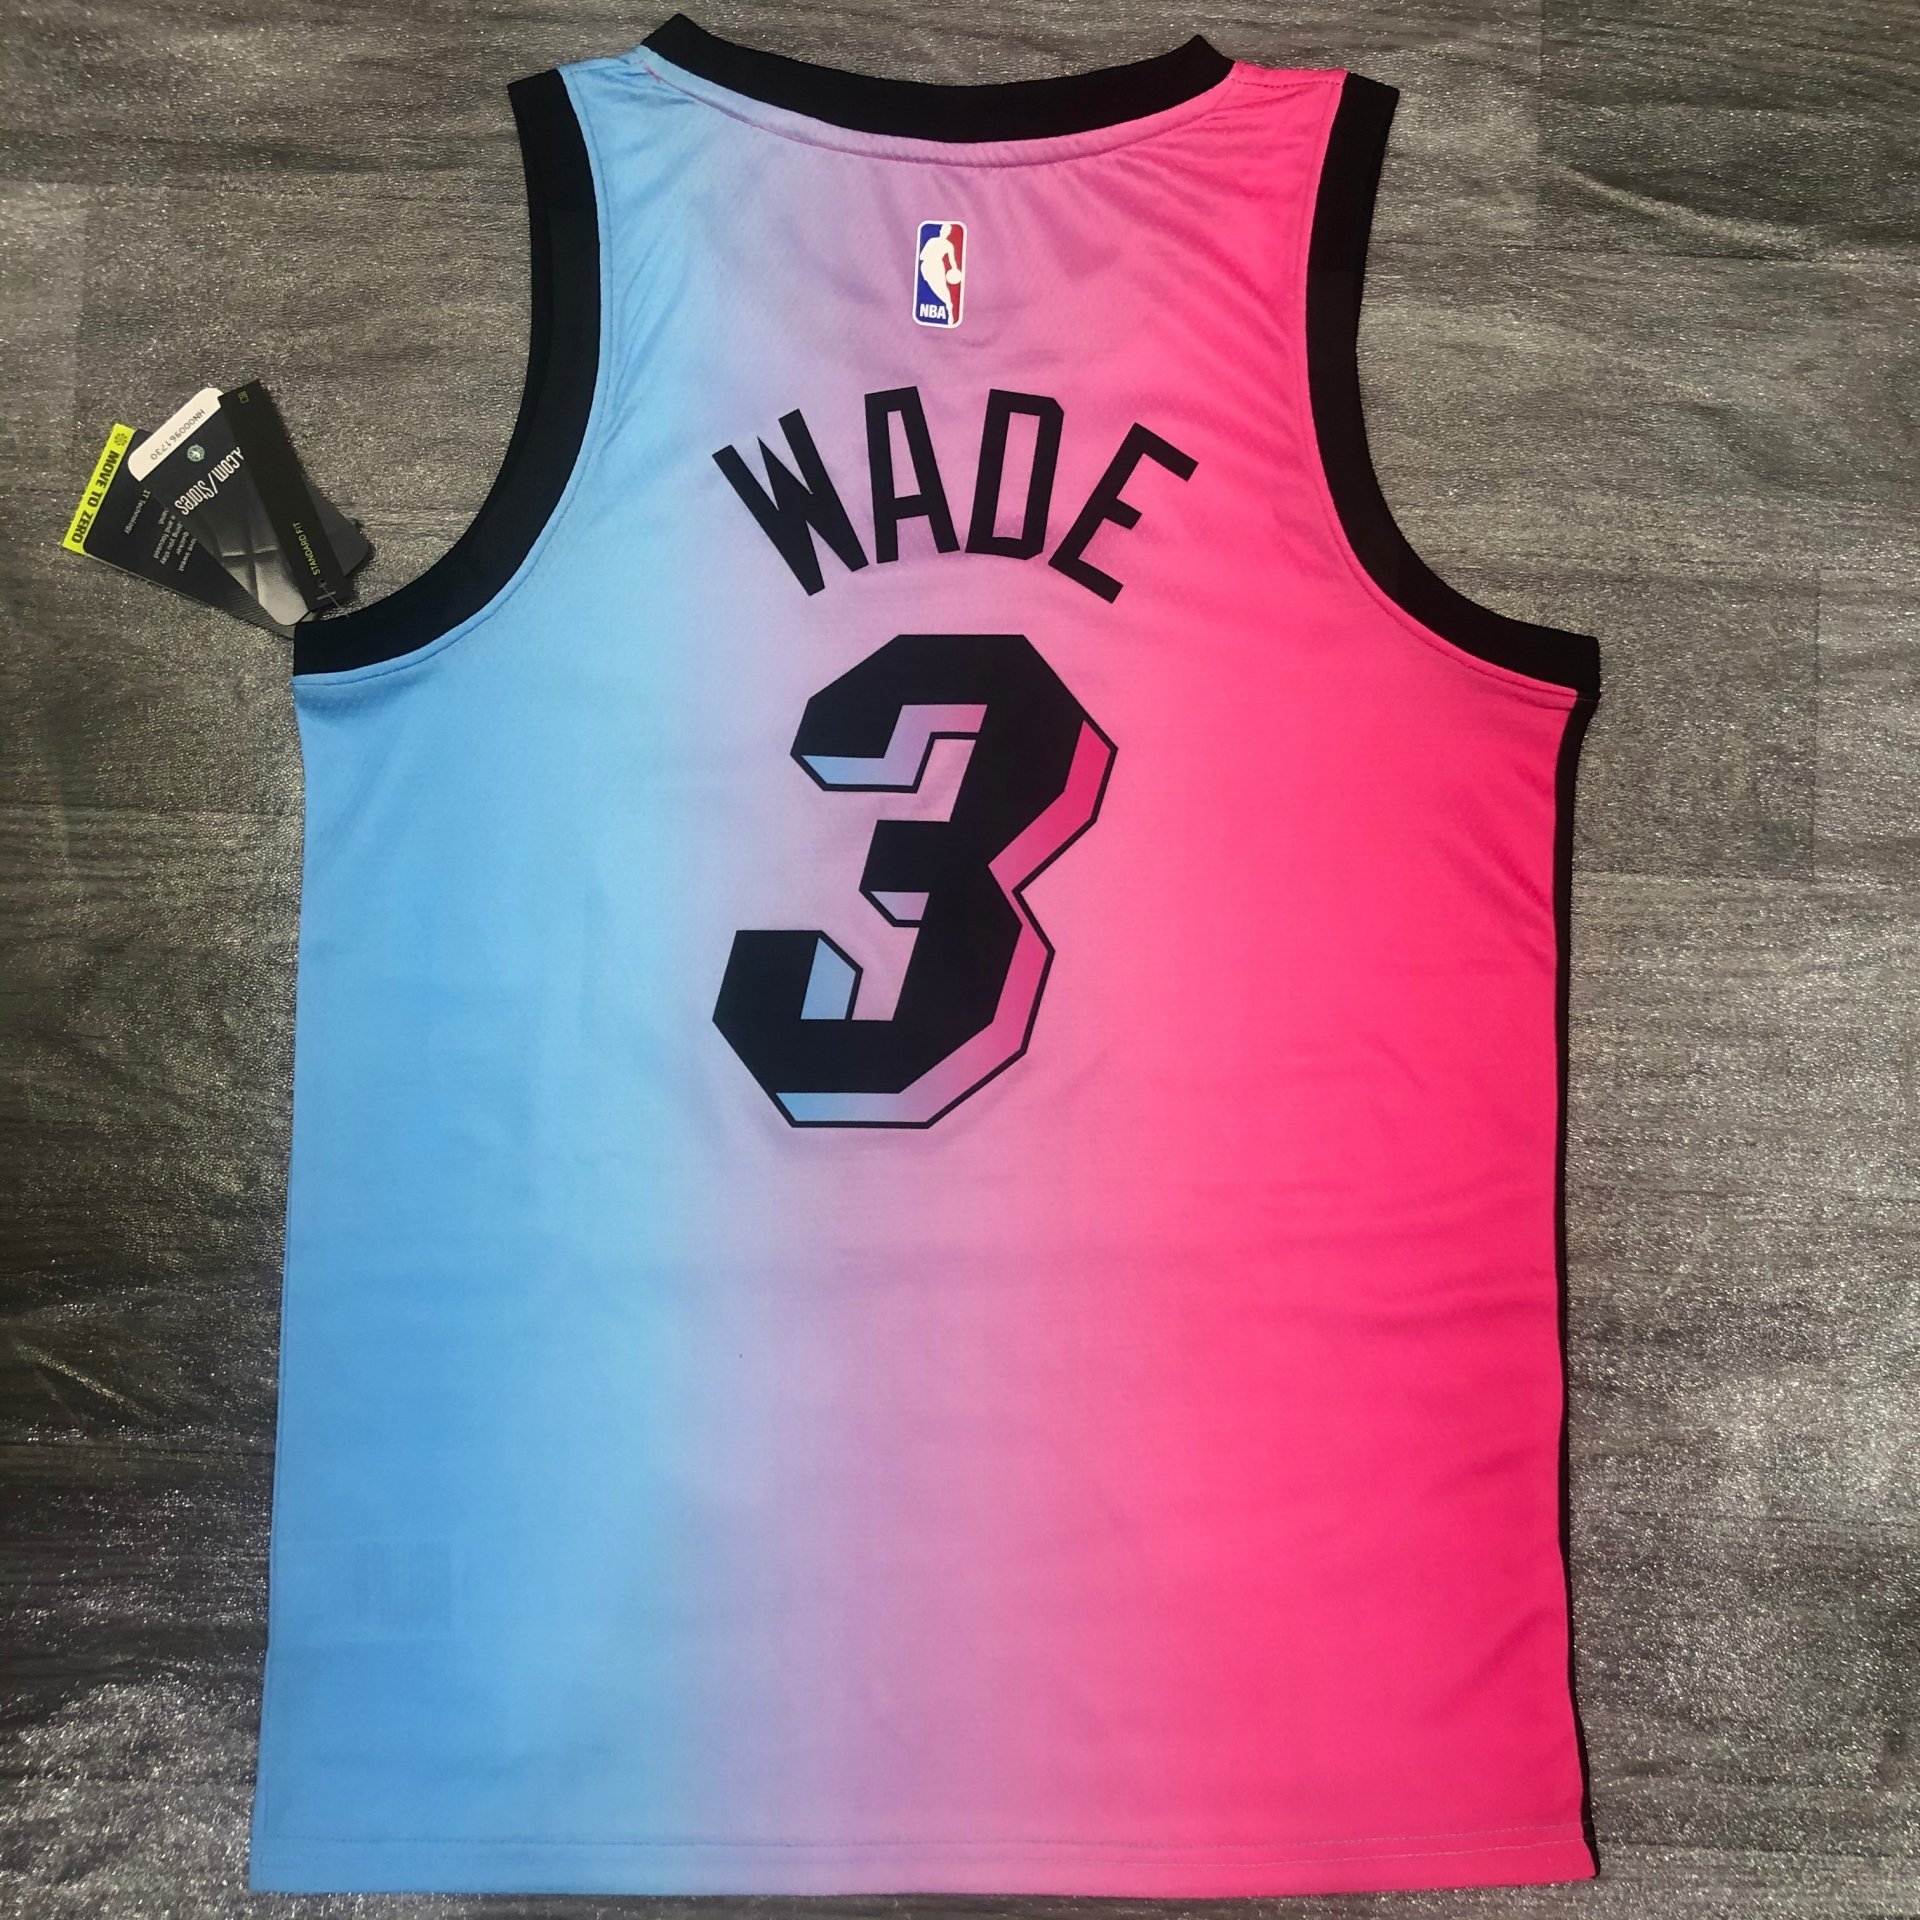 City Dwyane Wade #3 Miami Heat Jersey